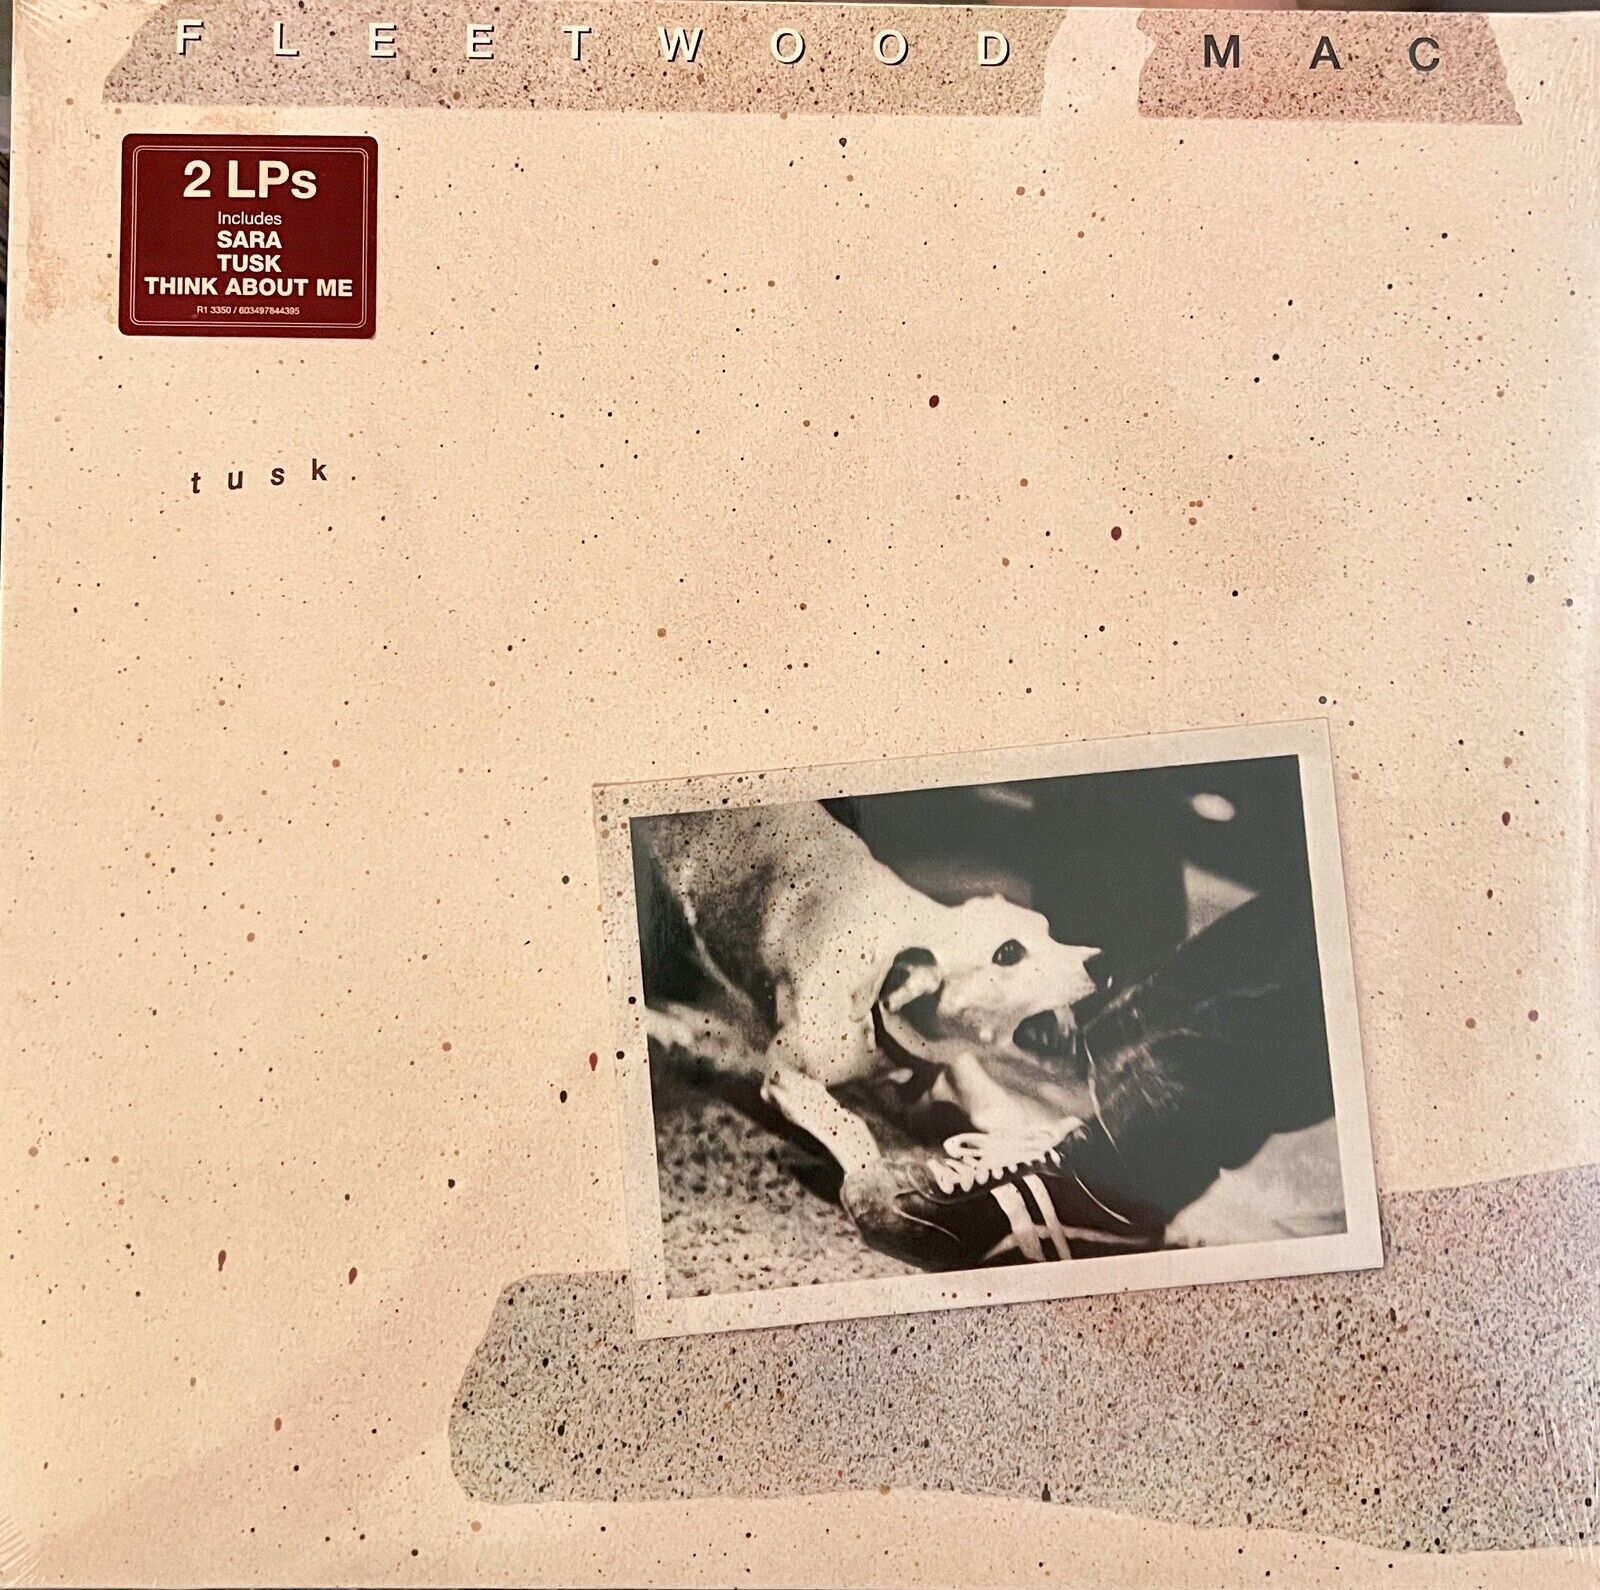 Tusk (2LP) by Fleetwood Mac (Record, 2021)